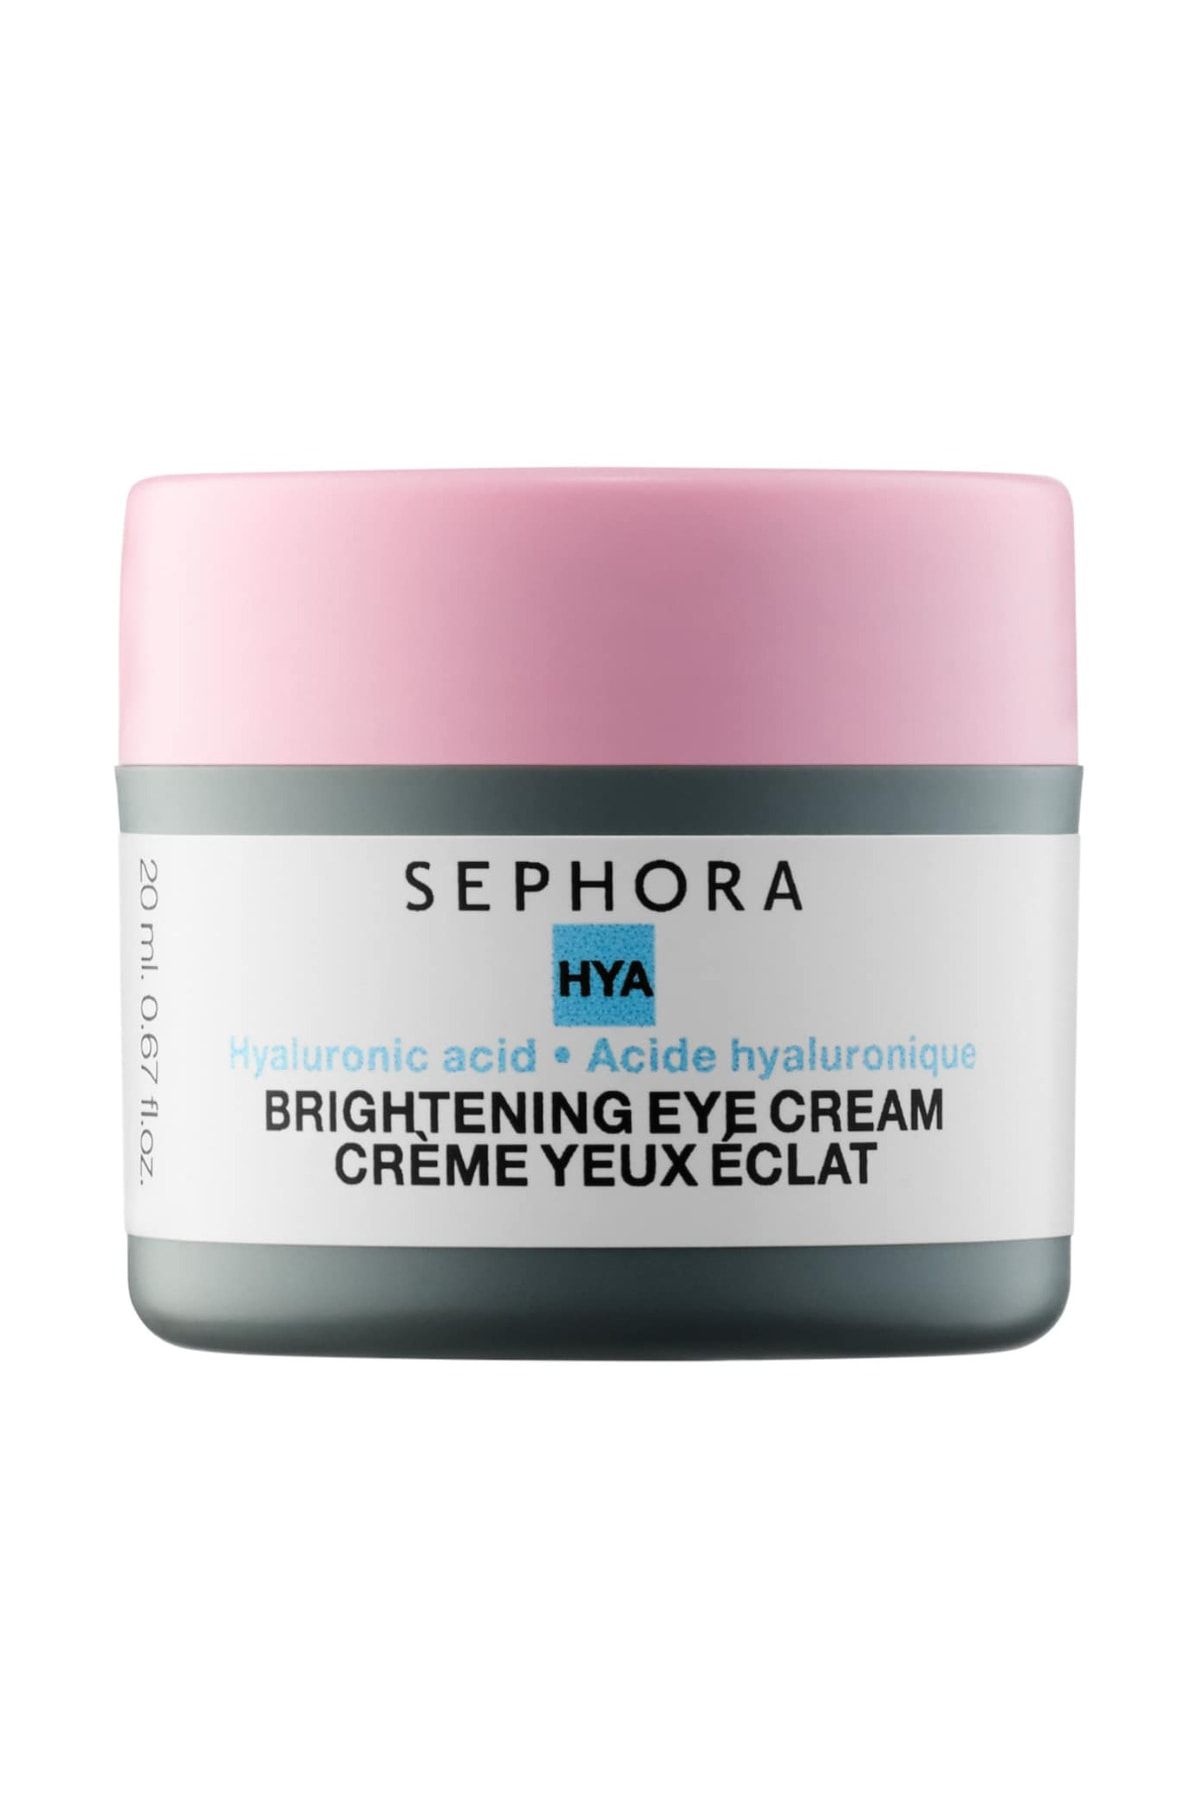 Sephora Brightening Eye Cream With Caffeine And Hyaluronic Acid